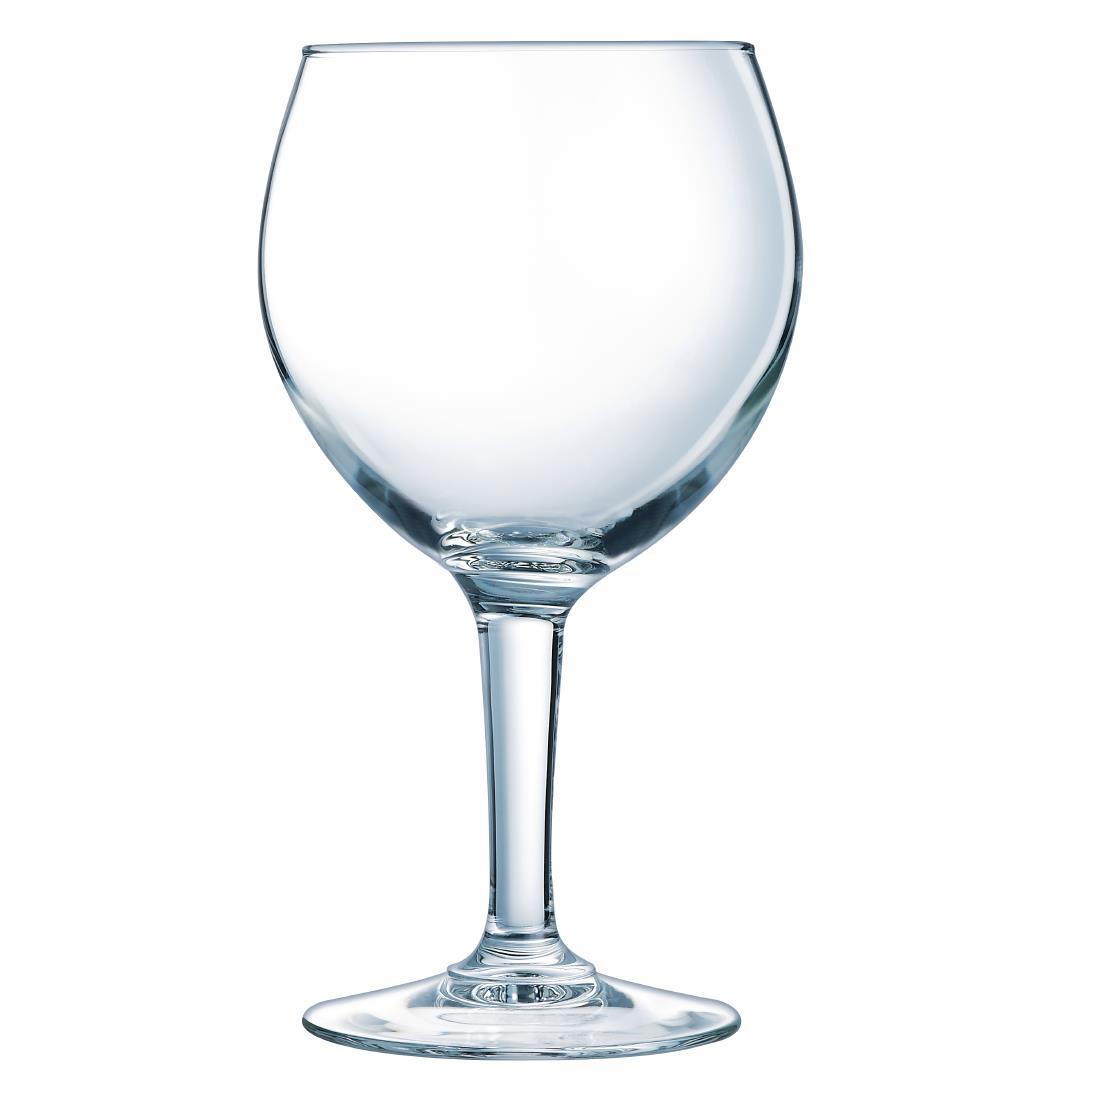 Olympia Gin Glasses 620ml 22oz (Pack of 6) - CY282  - 1